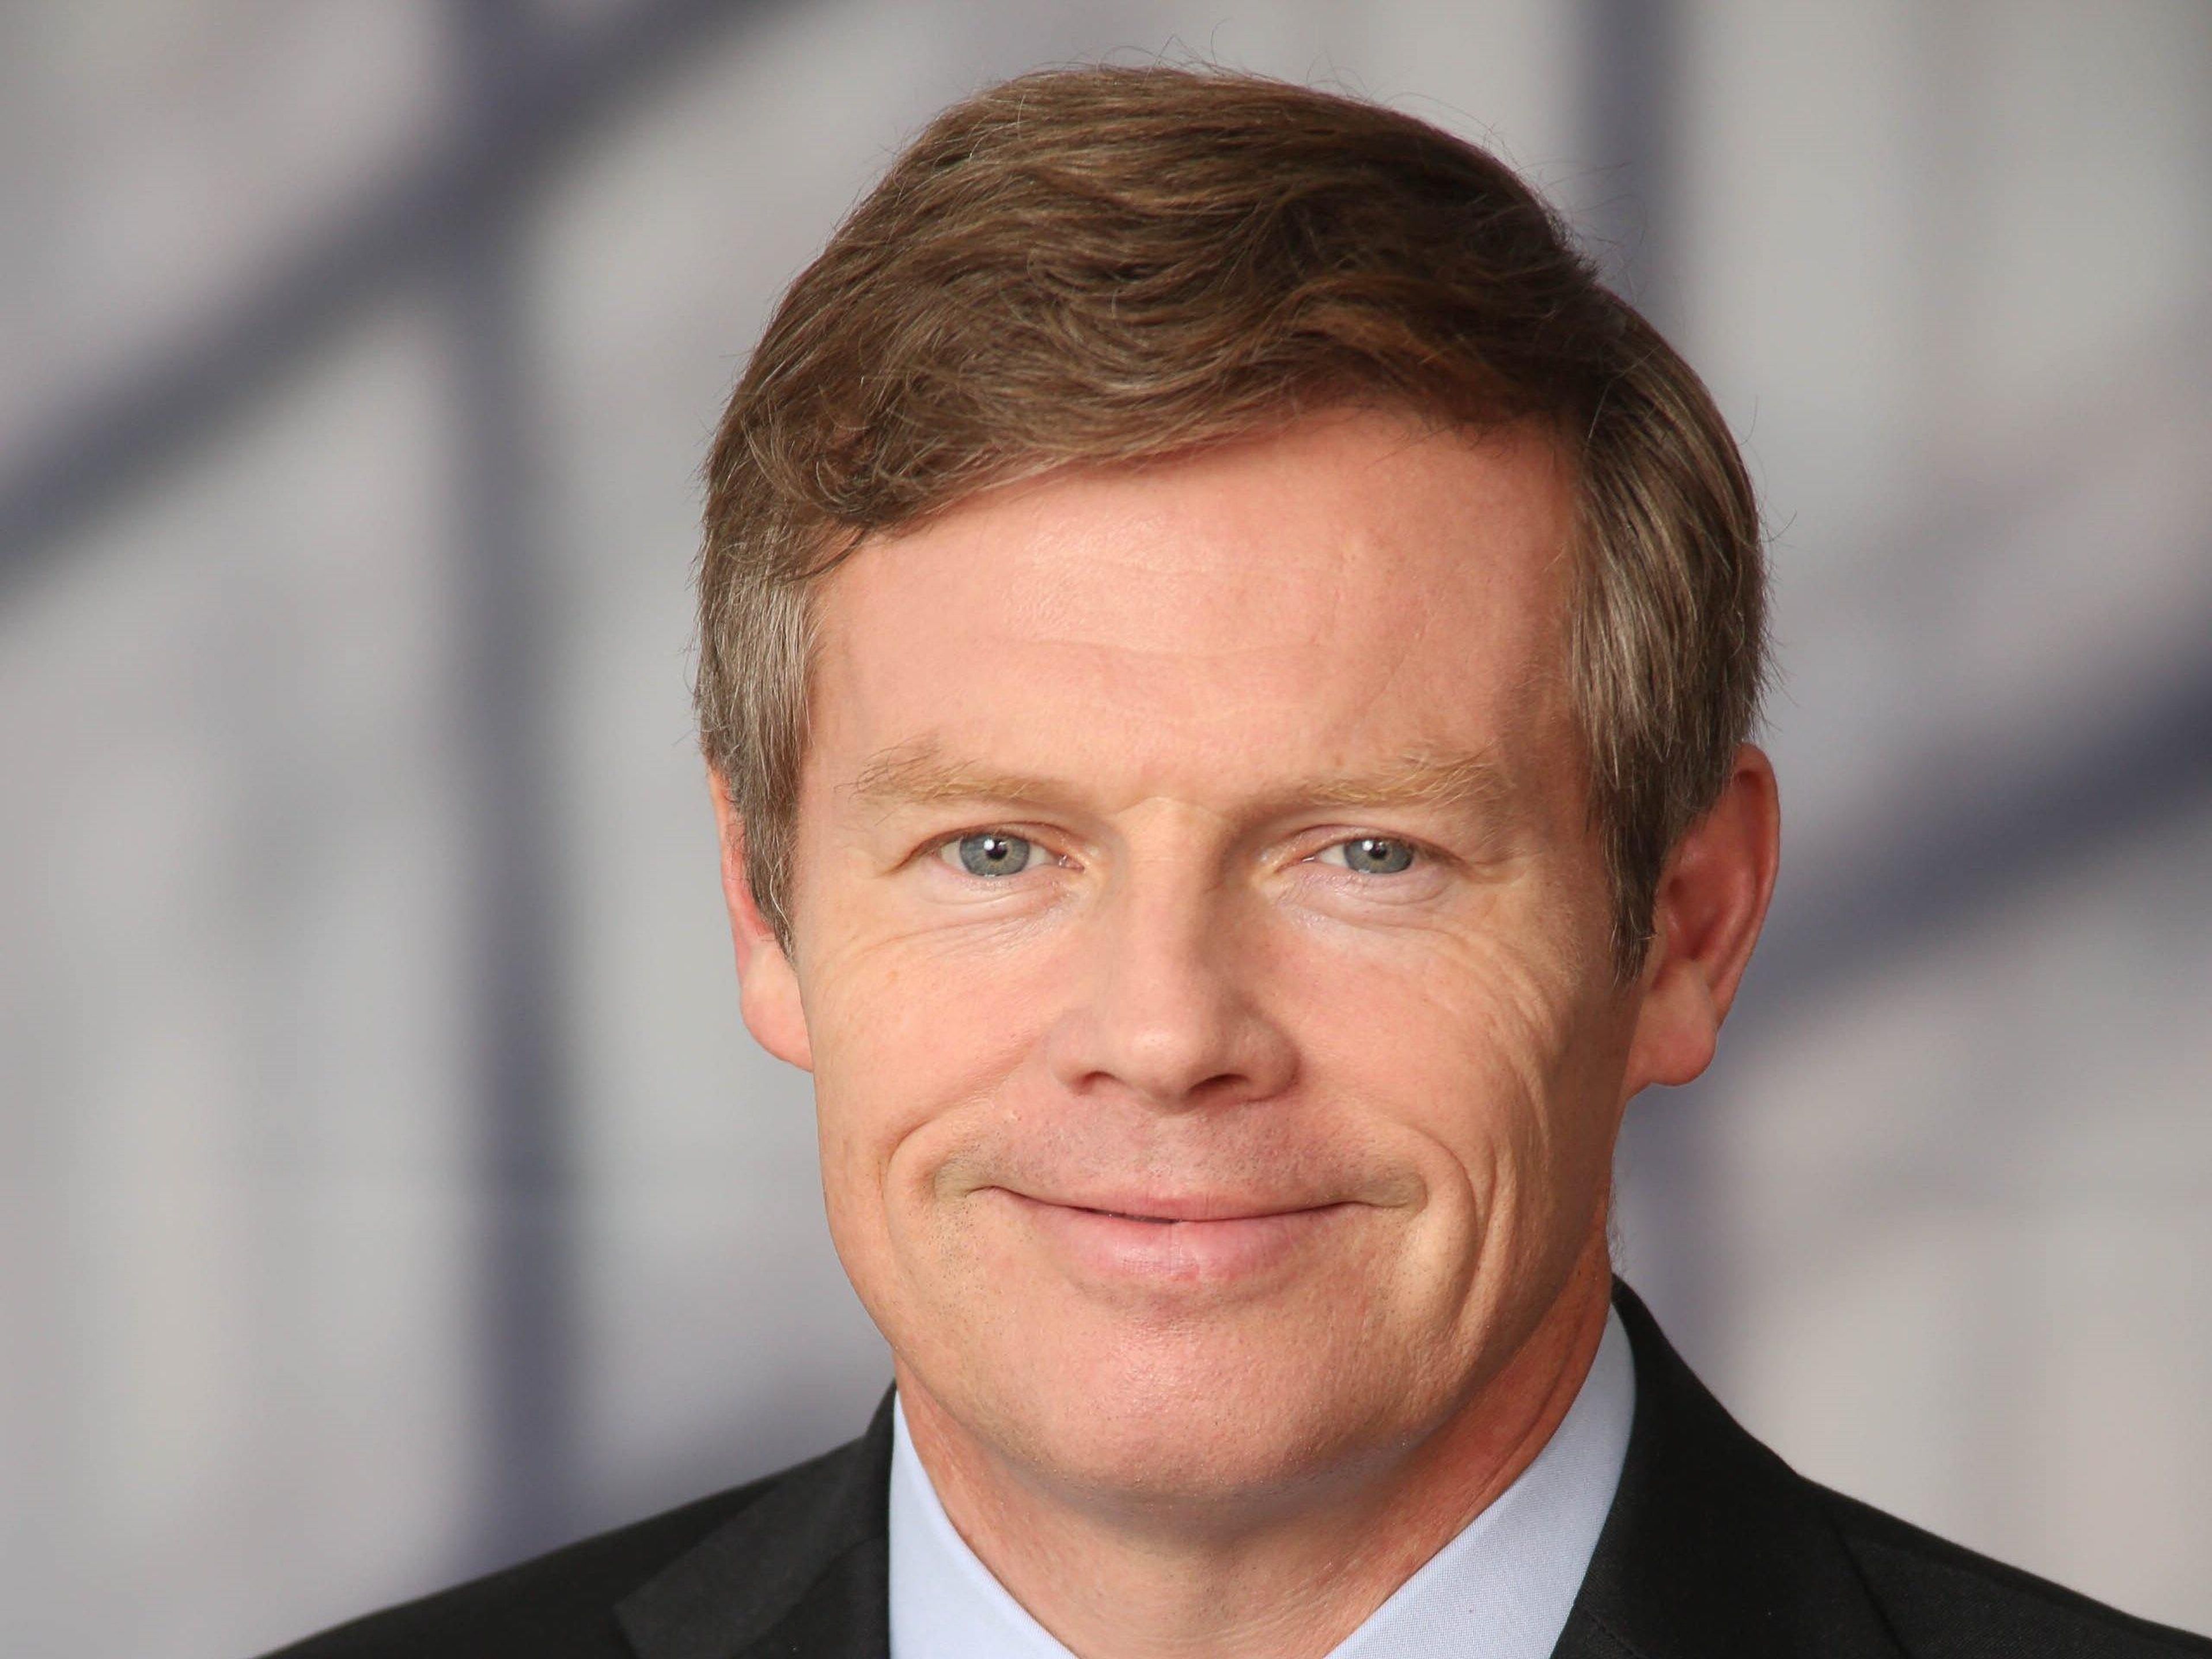 David Kelly, jefe de estategia en JPMorgan Asset Management